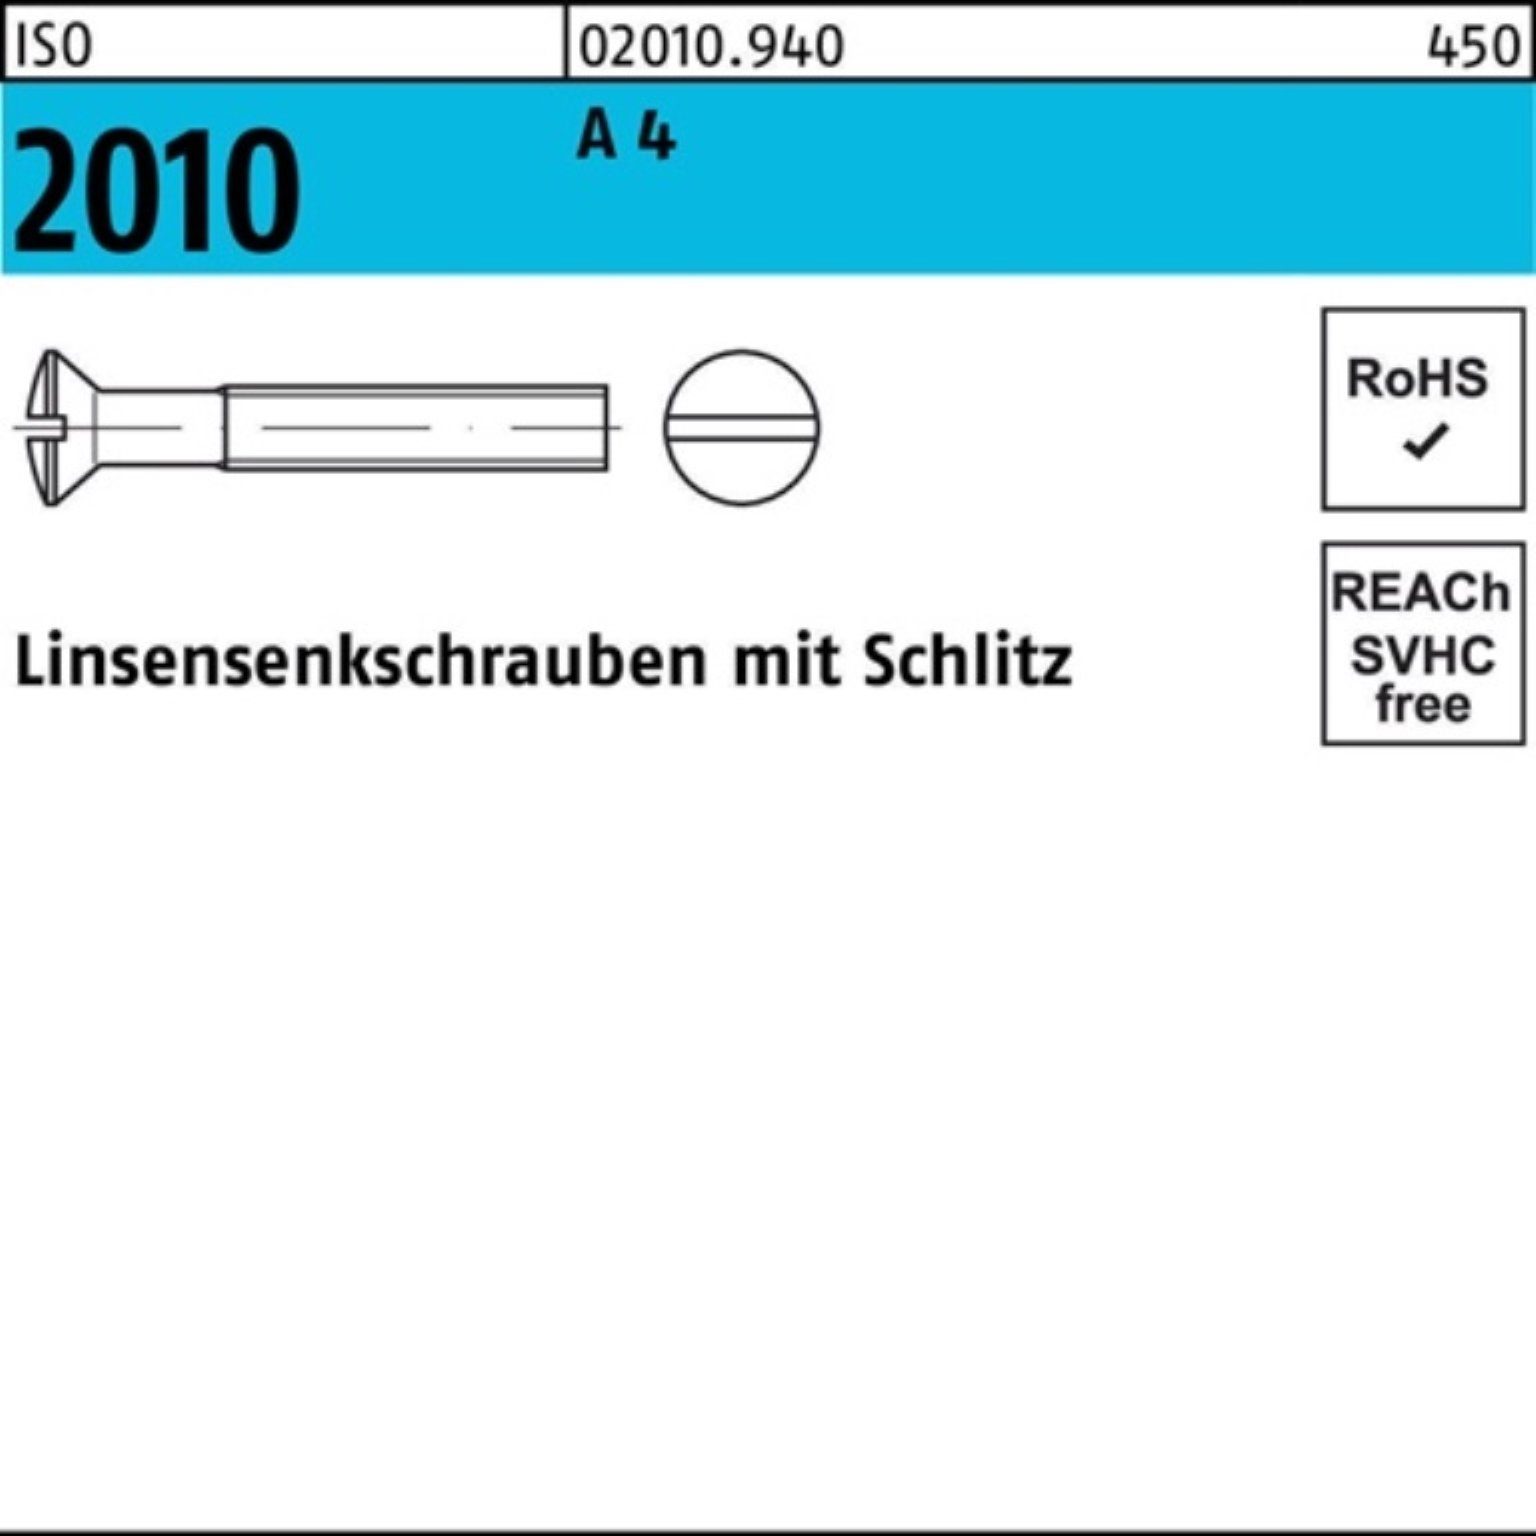 A ISO Schlitz 18 Stück 200er I Linsenschraube Linsensenkschraube 200 4 2010 Reyher M4x Pack